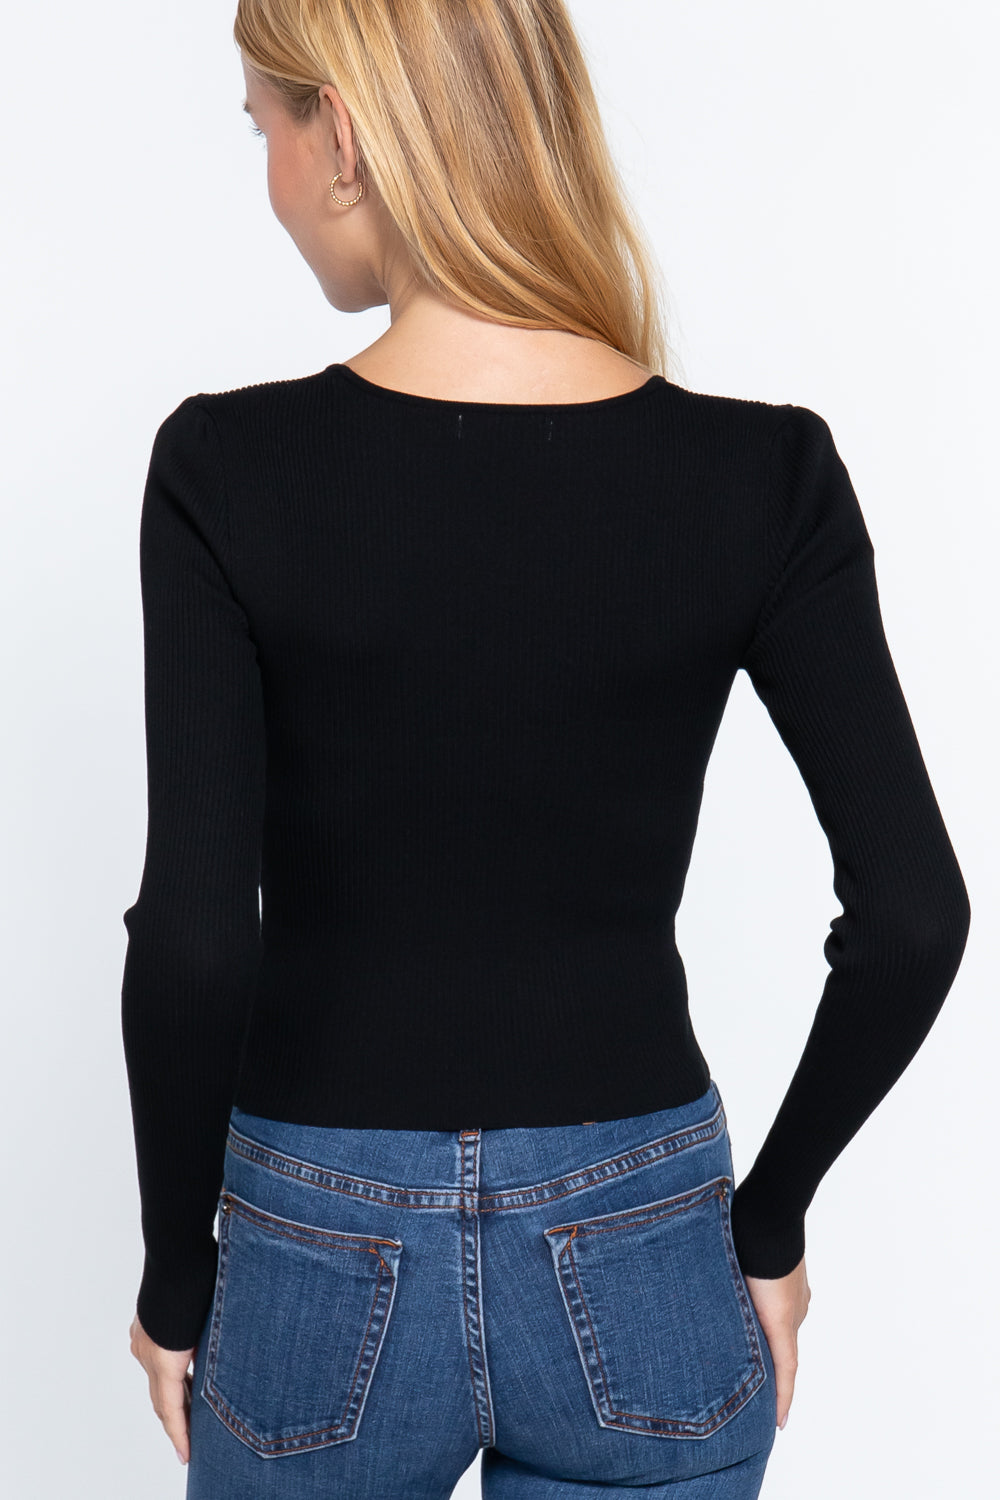 Black Shirring Sweetheart Neck Long Sleeve Elegant Slim Fit Sweater Top_ Shirts & Tops jehouze 